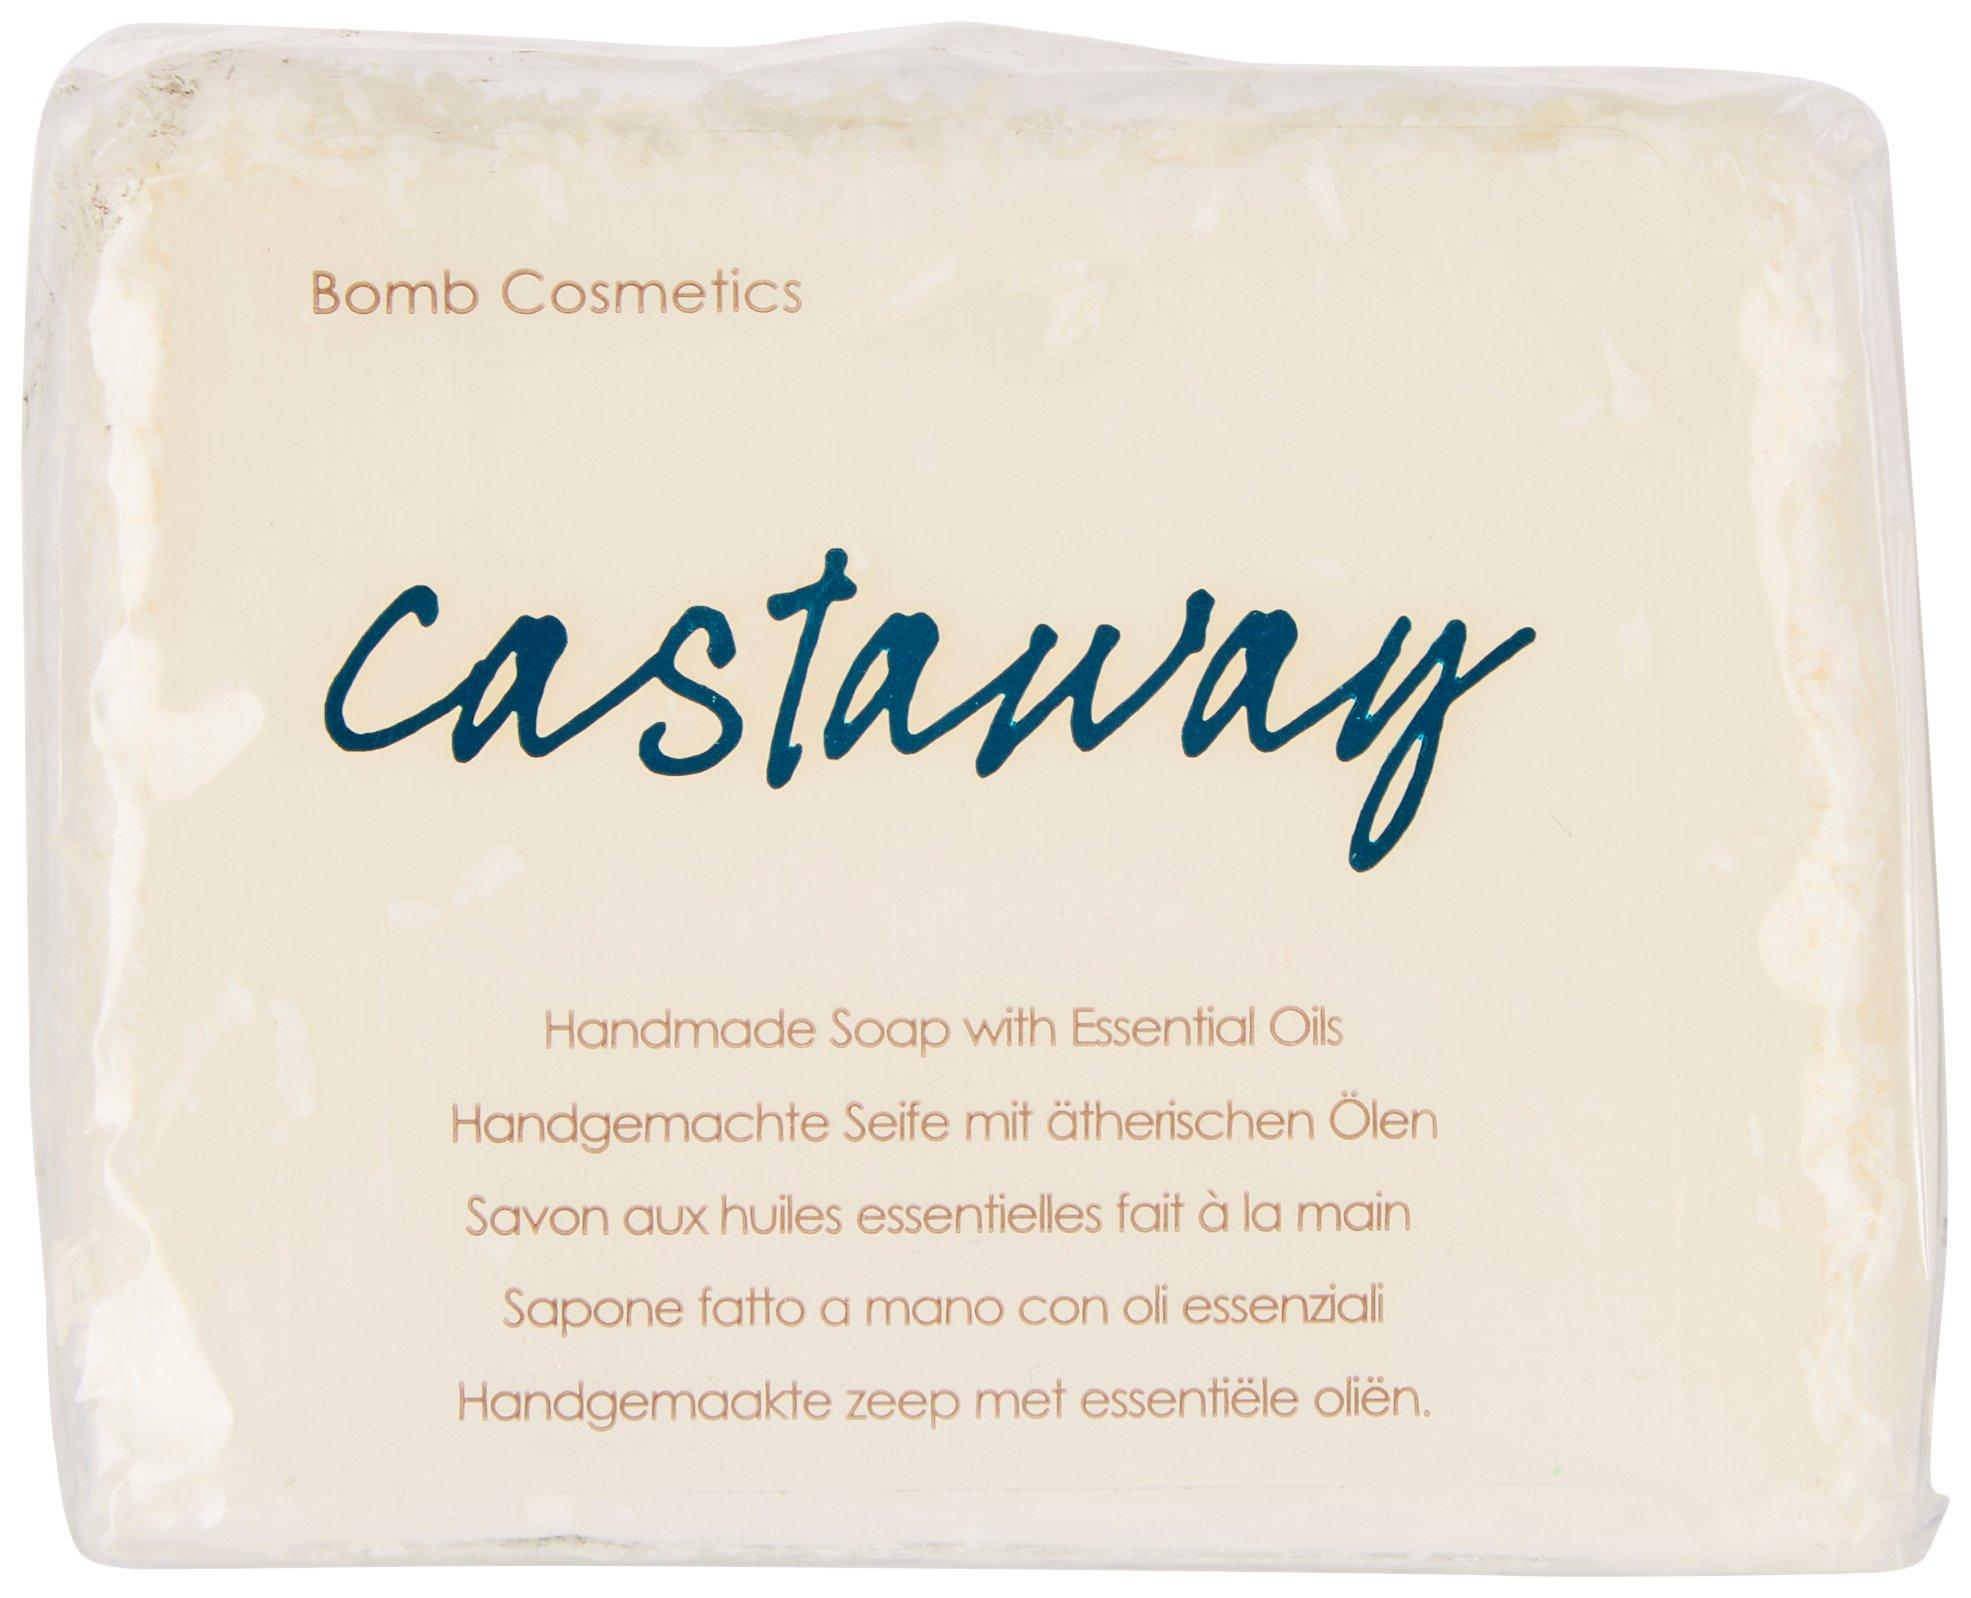 Bomb Cosmetics Castaway Handmade Soap